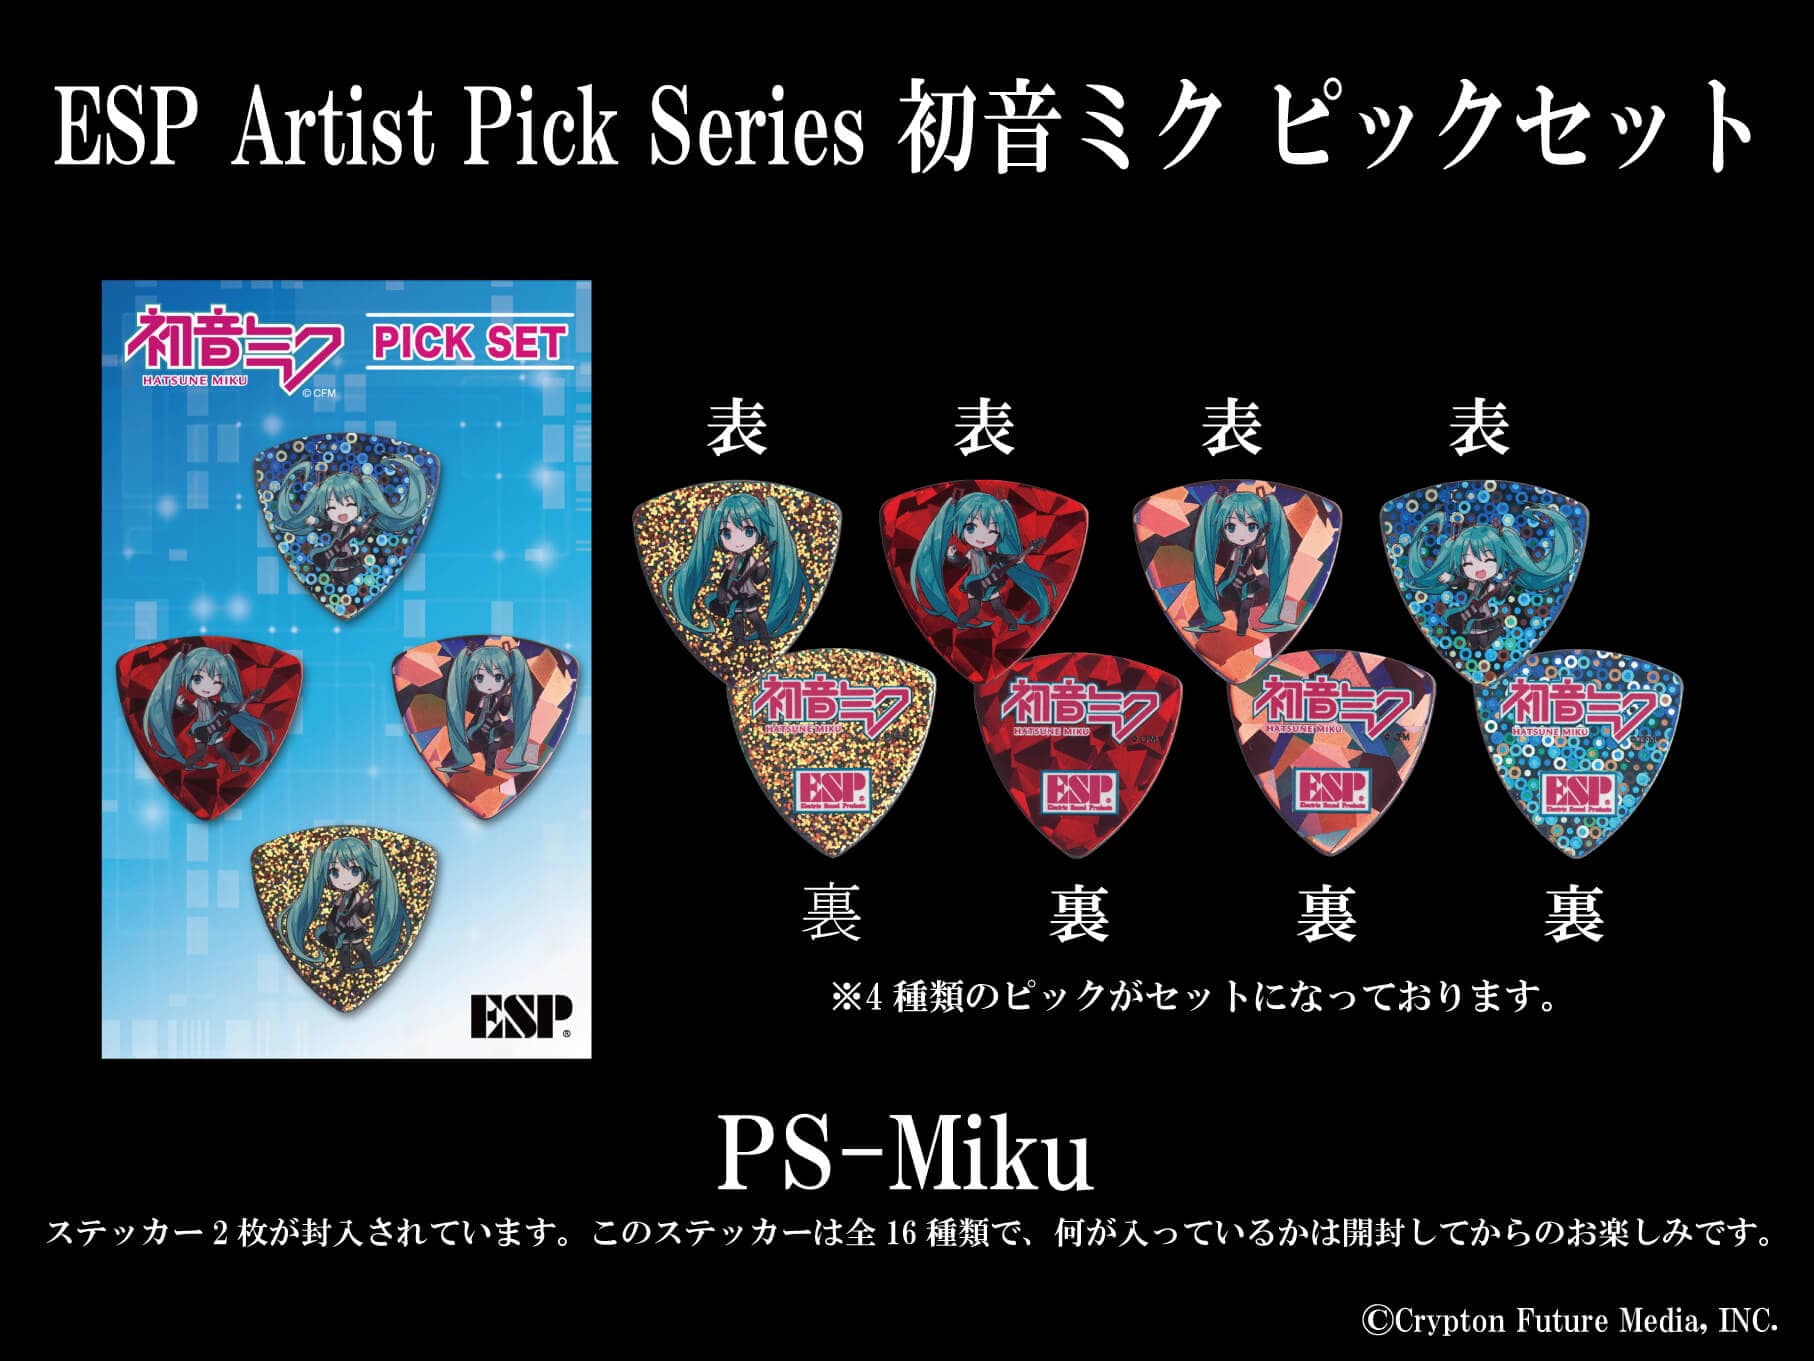 ESP(イーエスピー) Artist Pick Series PS-Miku 初音ミク ピックセット